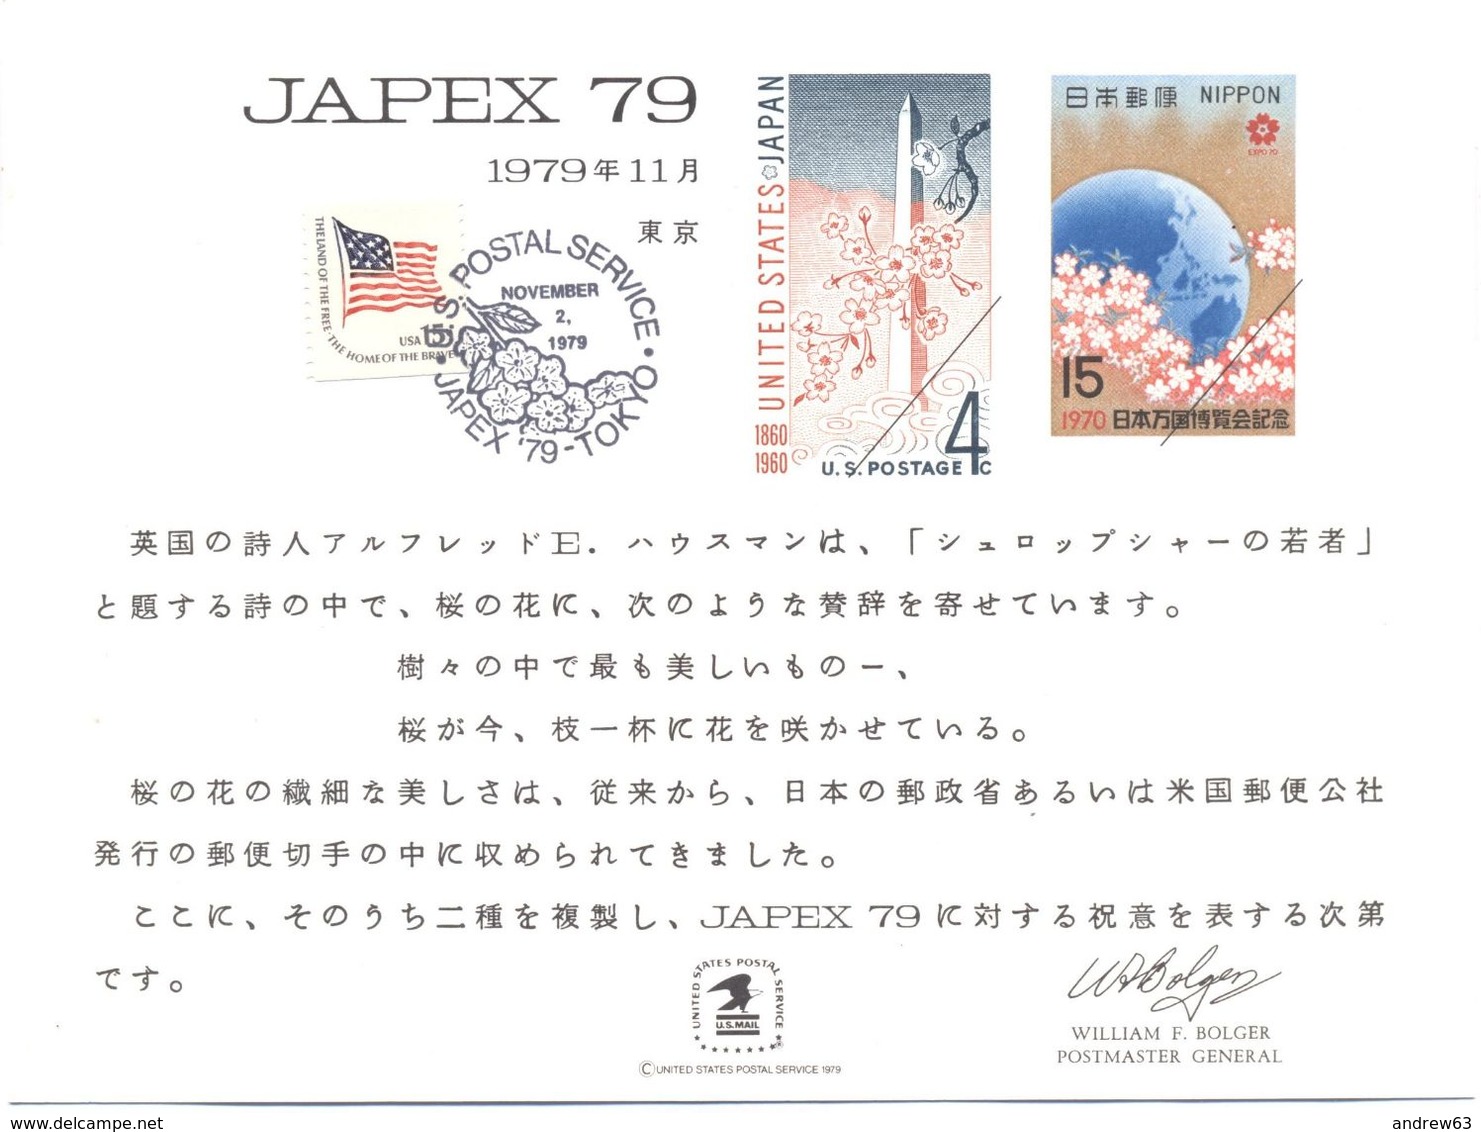 STATI UNITI - USA - 1979 - Cancelled Souvenir Card - Japex '79 - Souvenirs & Special Cards